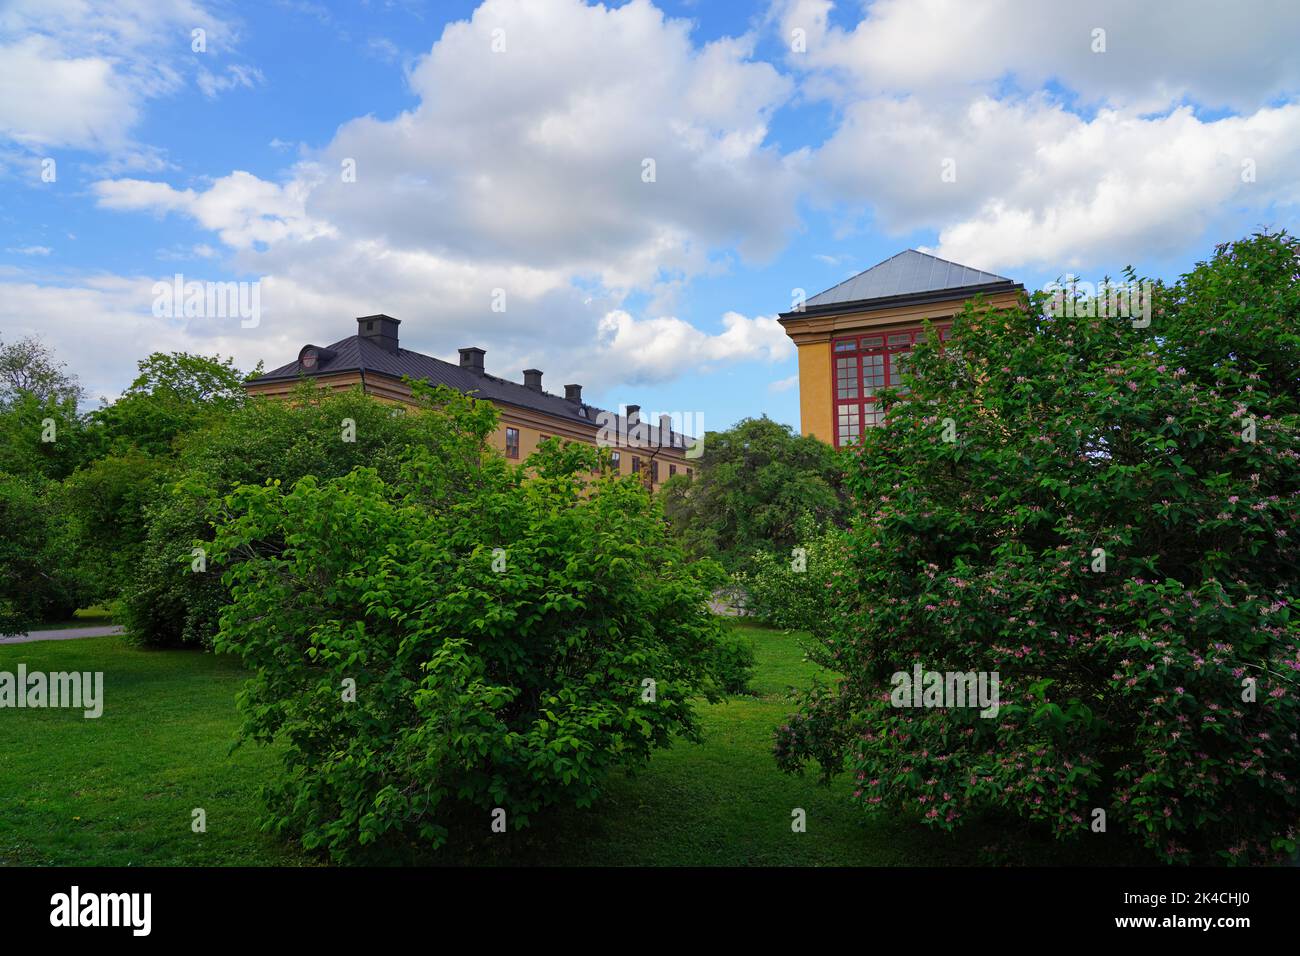 UPPSALA, SWEDEN -1 JUN 2022- View of the University of Uppsala Botanical Garden created by Carl Linnaeus in Uppsala, Sweden. Stock Photo